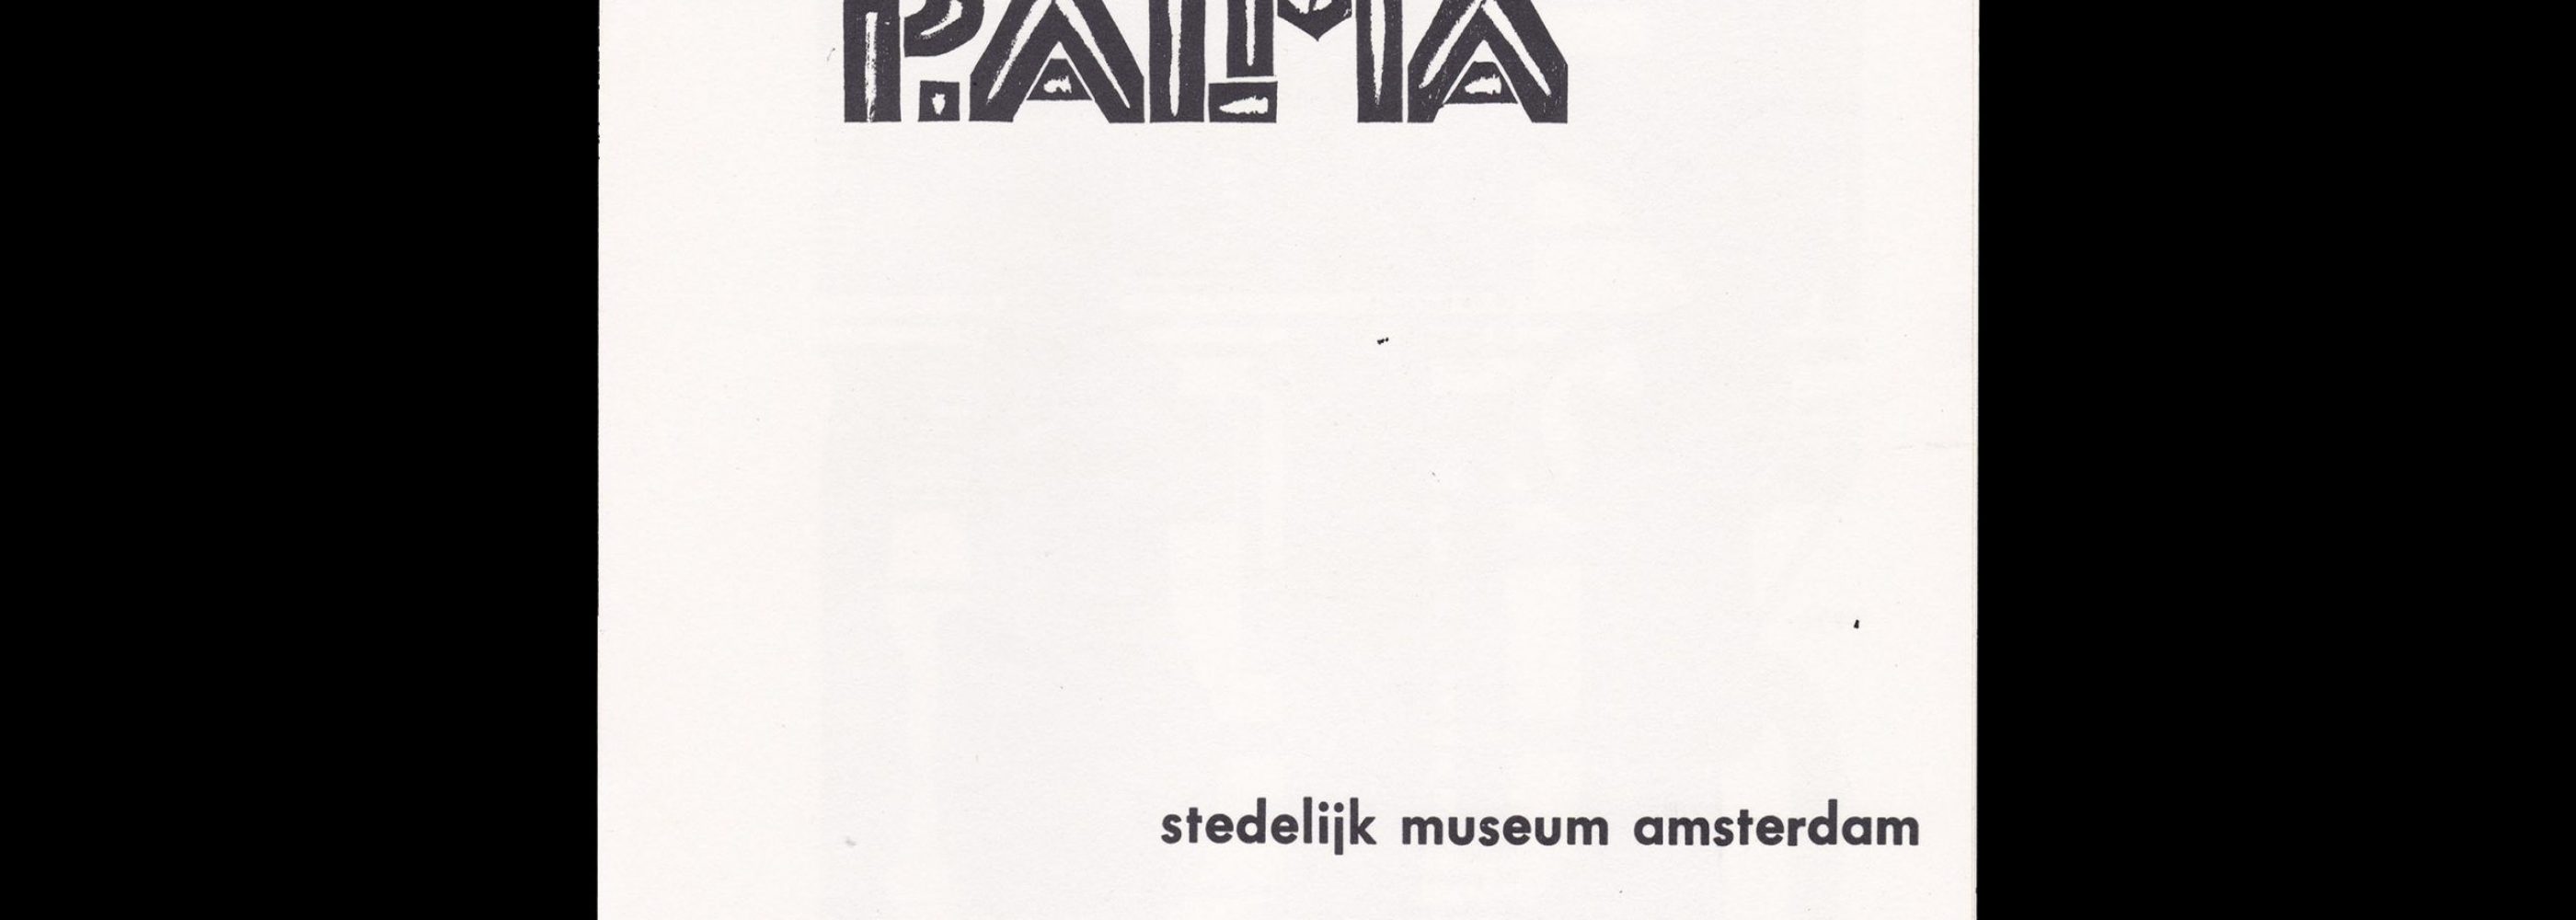 P. [Peter] Alma, Stedelijk Museum Amsterdam, 1960 designed by Willem Sandberg